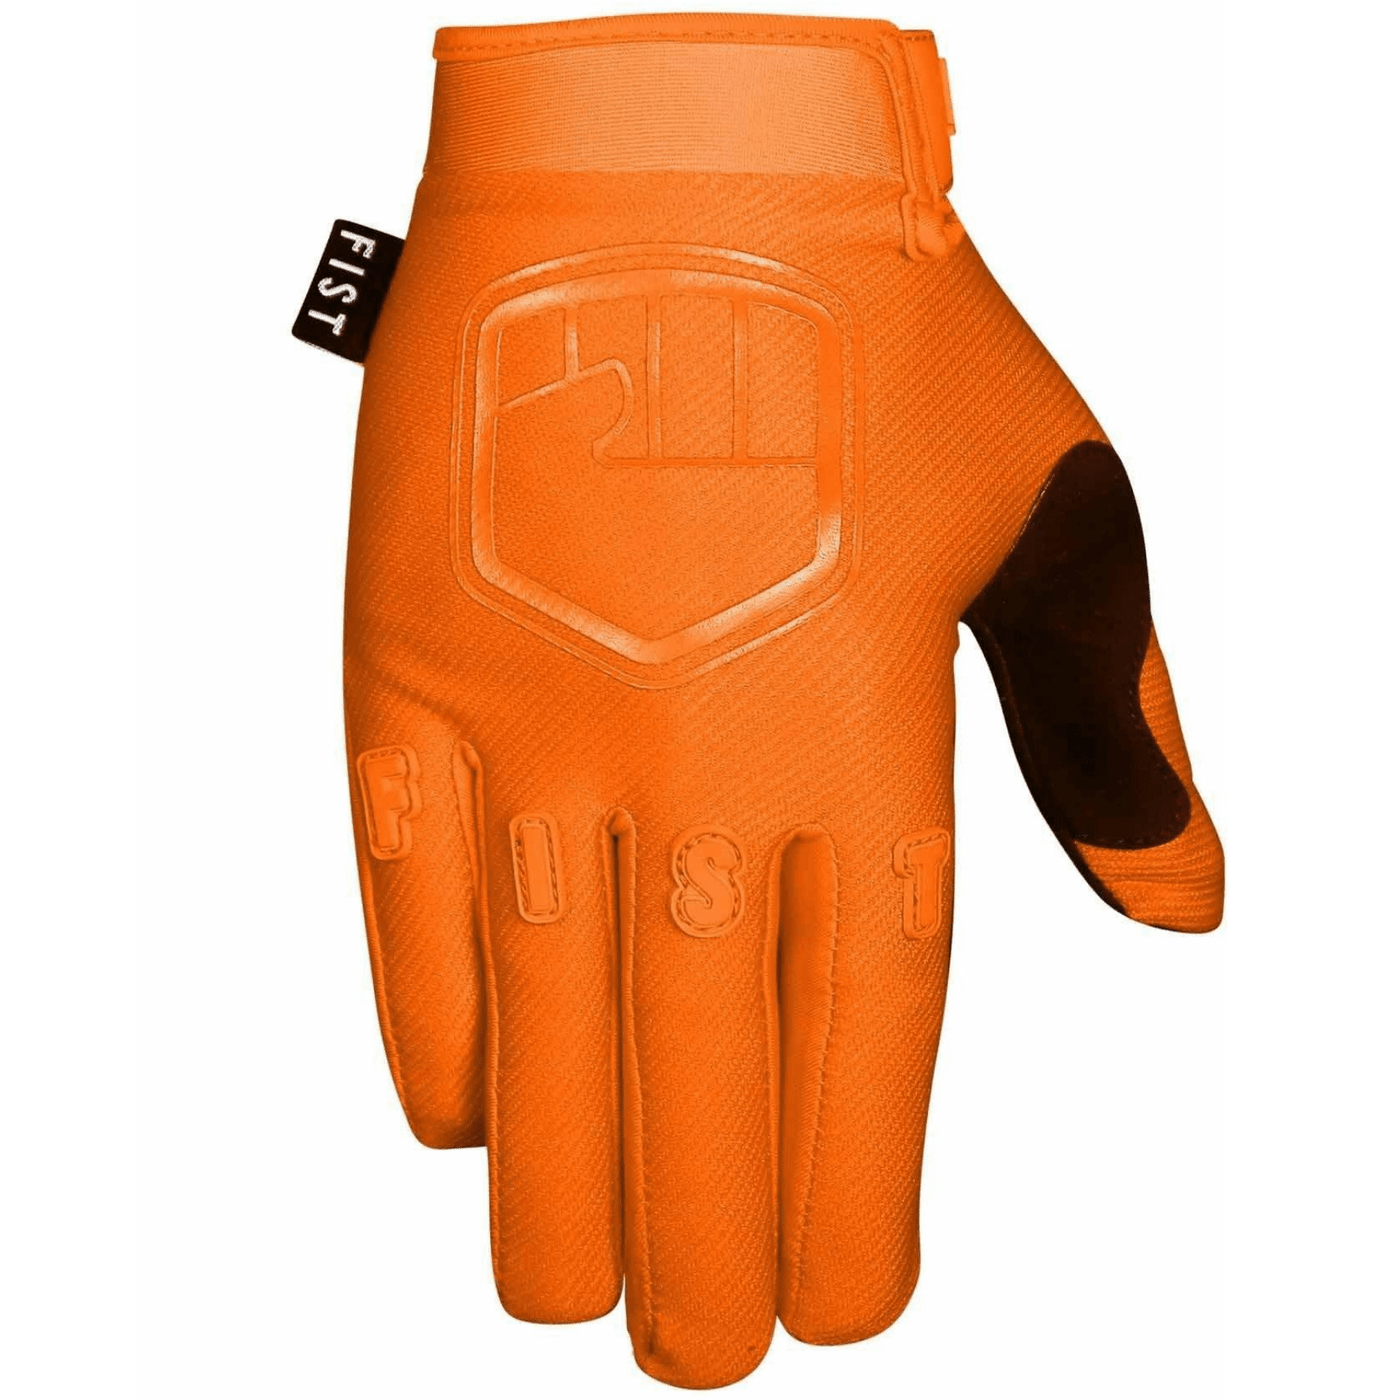 FIST Gloves Stocker - Orange